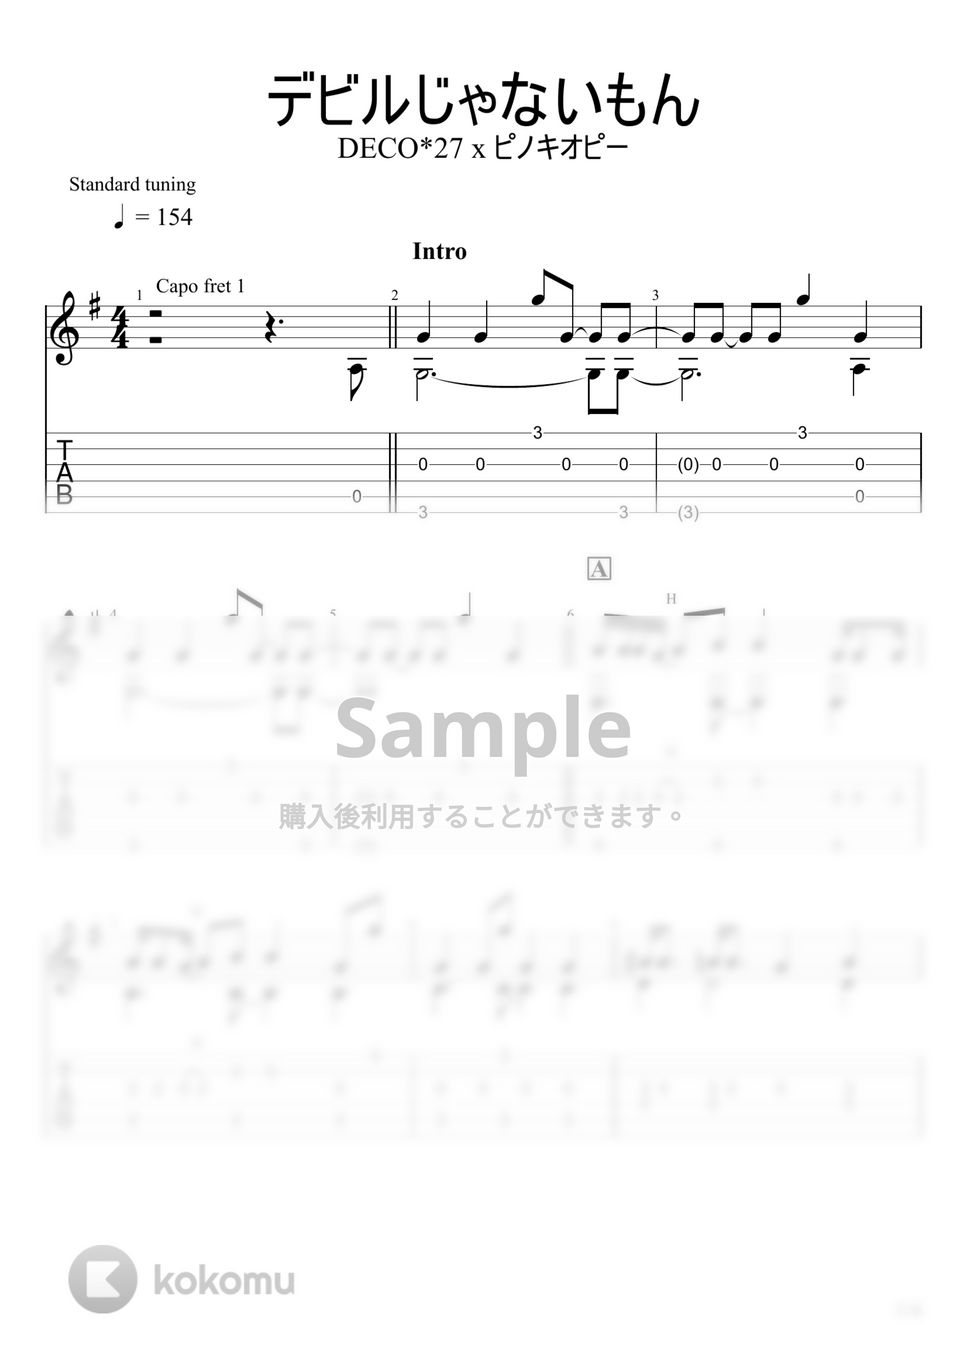 DECO*27 x ピノキオピー - デビルじゃないもん (ソロギター) by u3danchou